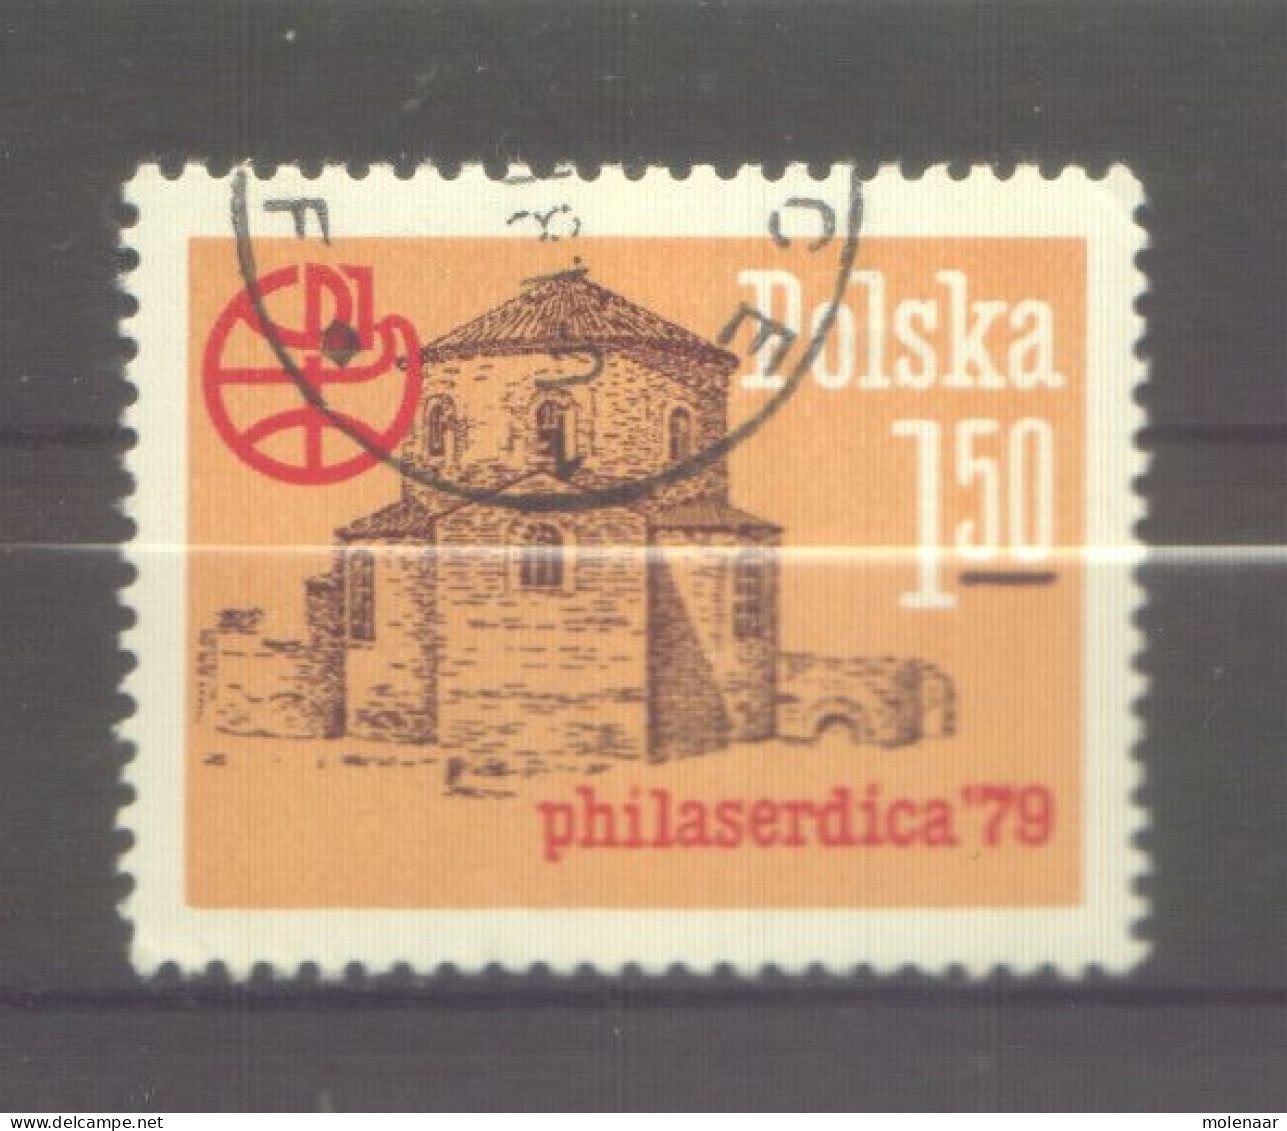 Postzegels > Europa > Polen > 1944-.... Republiek > 1971-80 > Gebruikt No. 2628  (12168) - Gebraucht